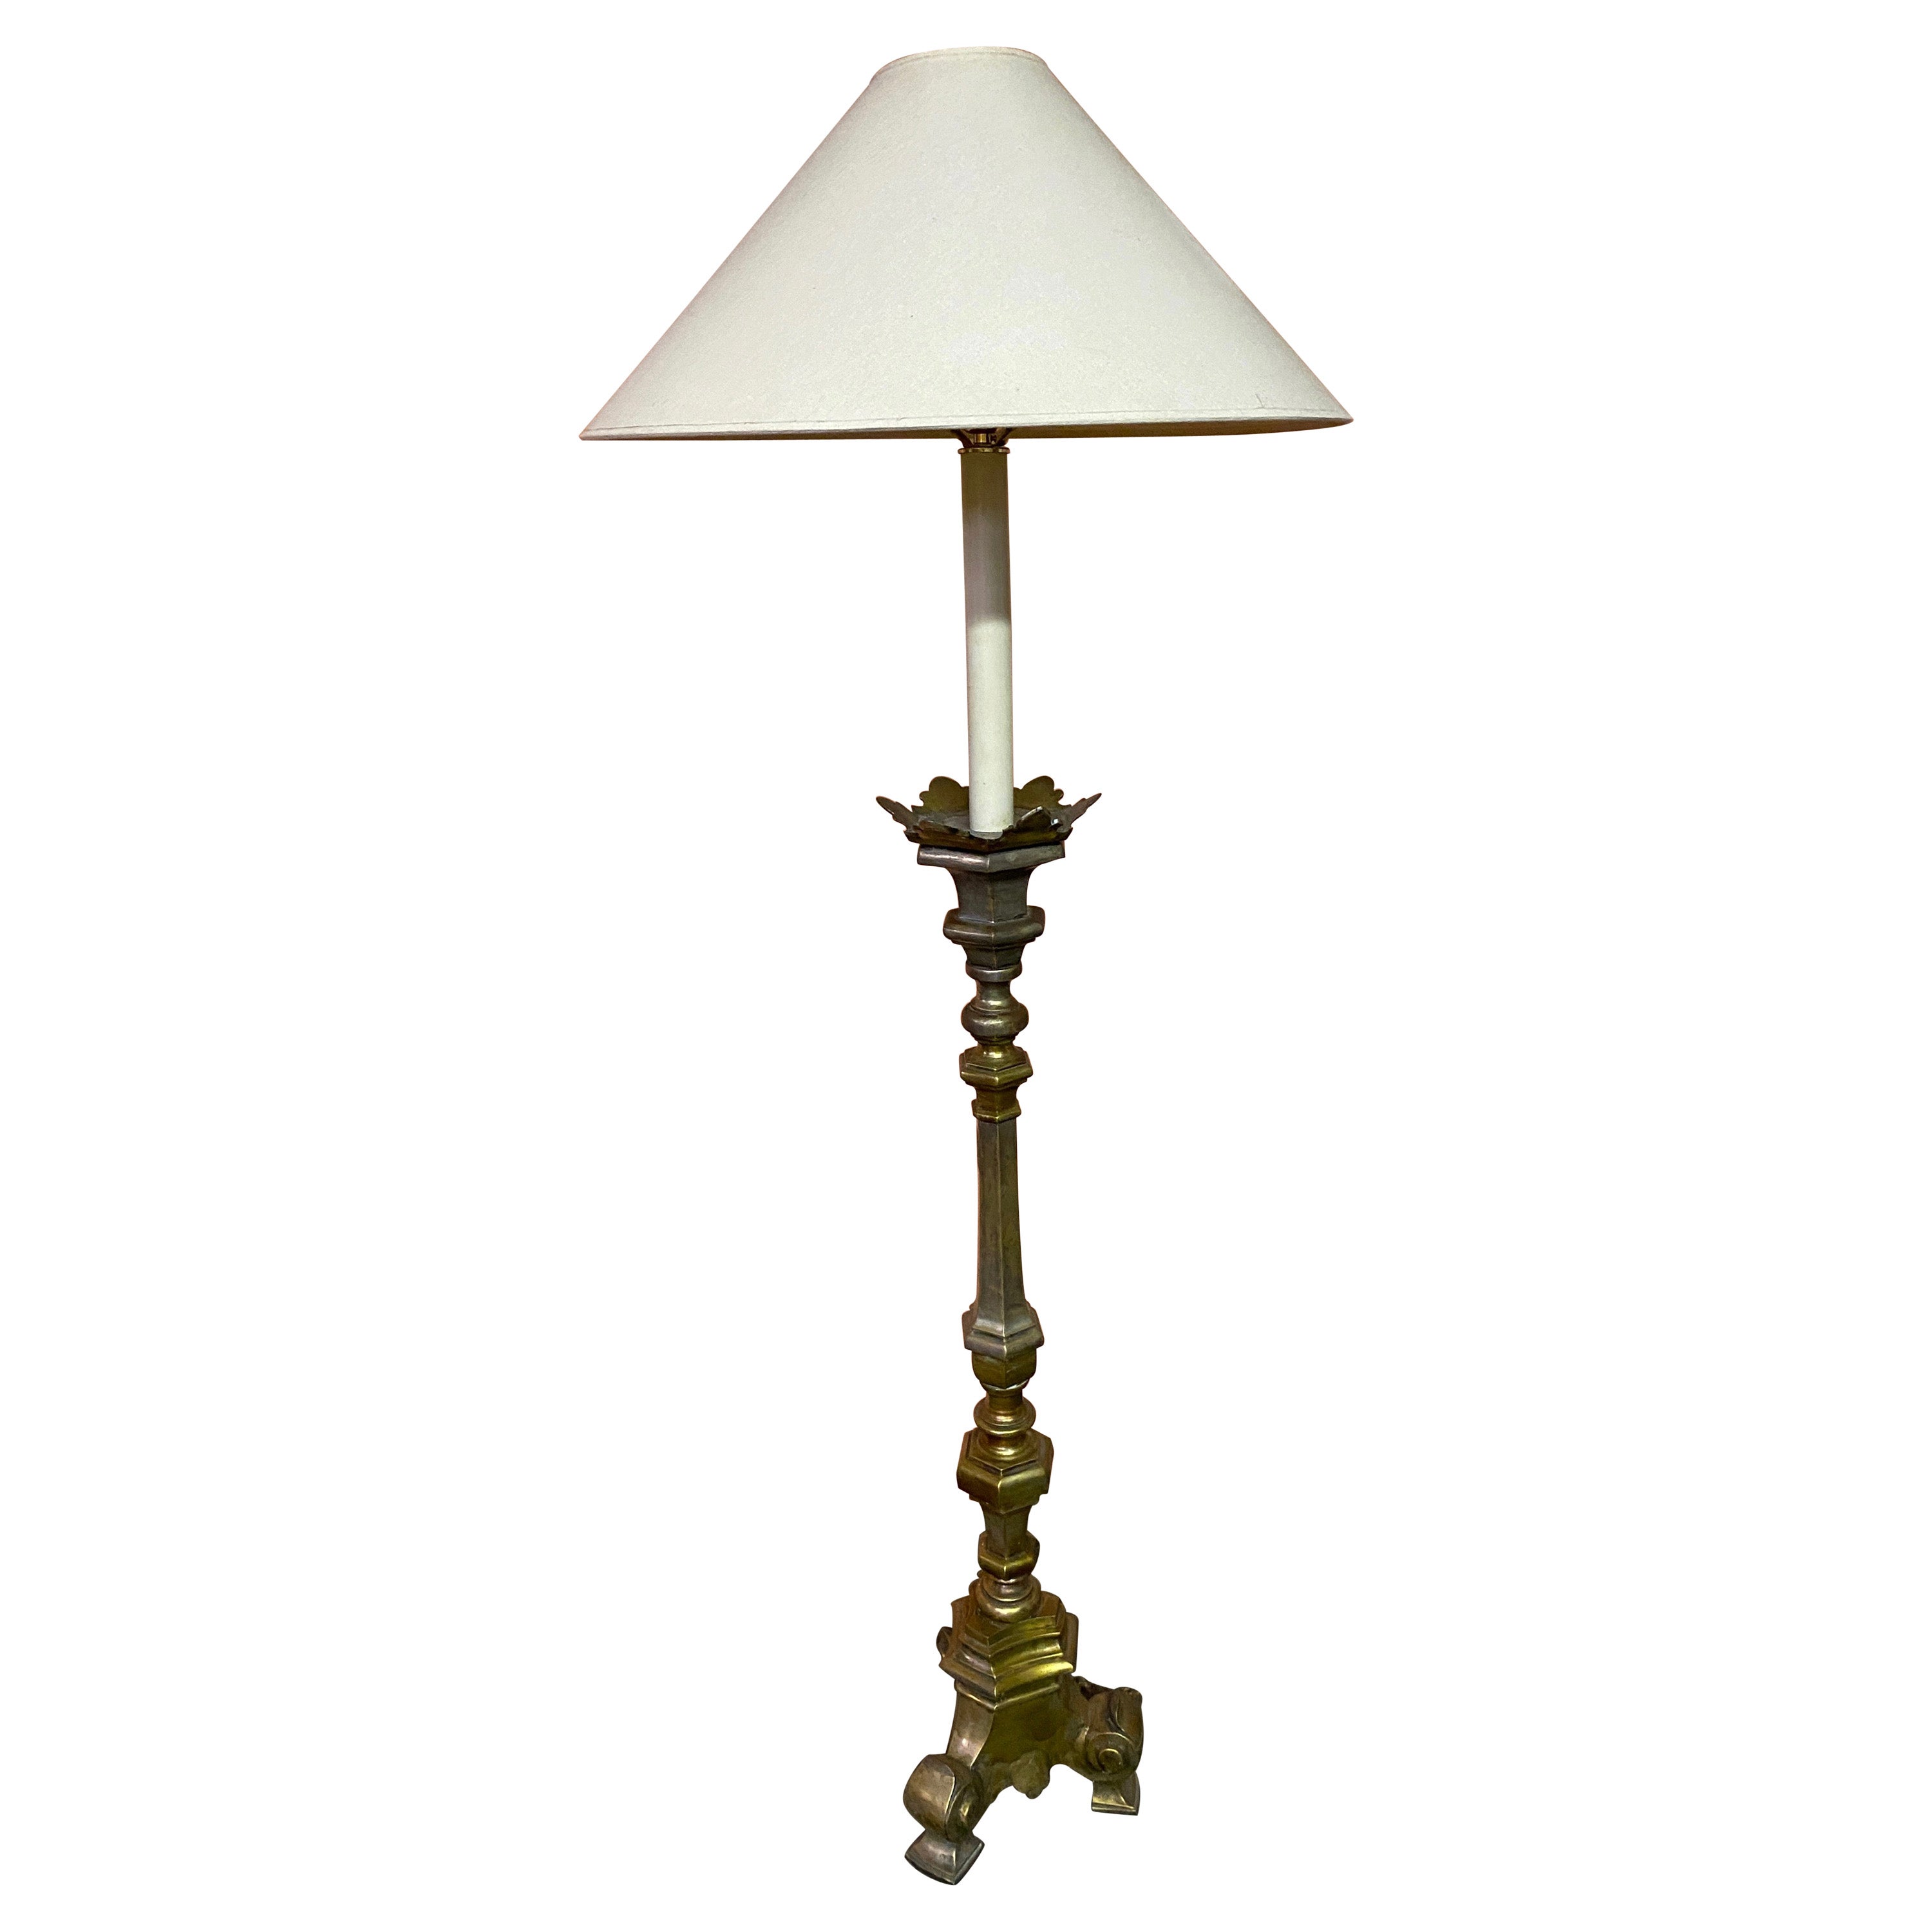 Antike Stehlampe aus Messing im Renaissance-Stil, Renaissance